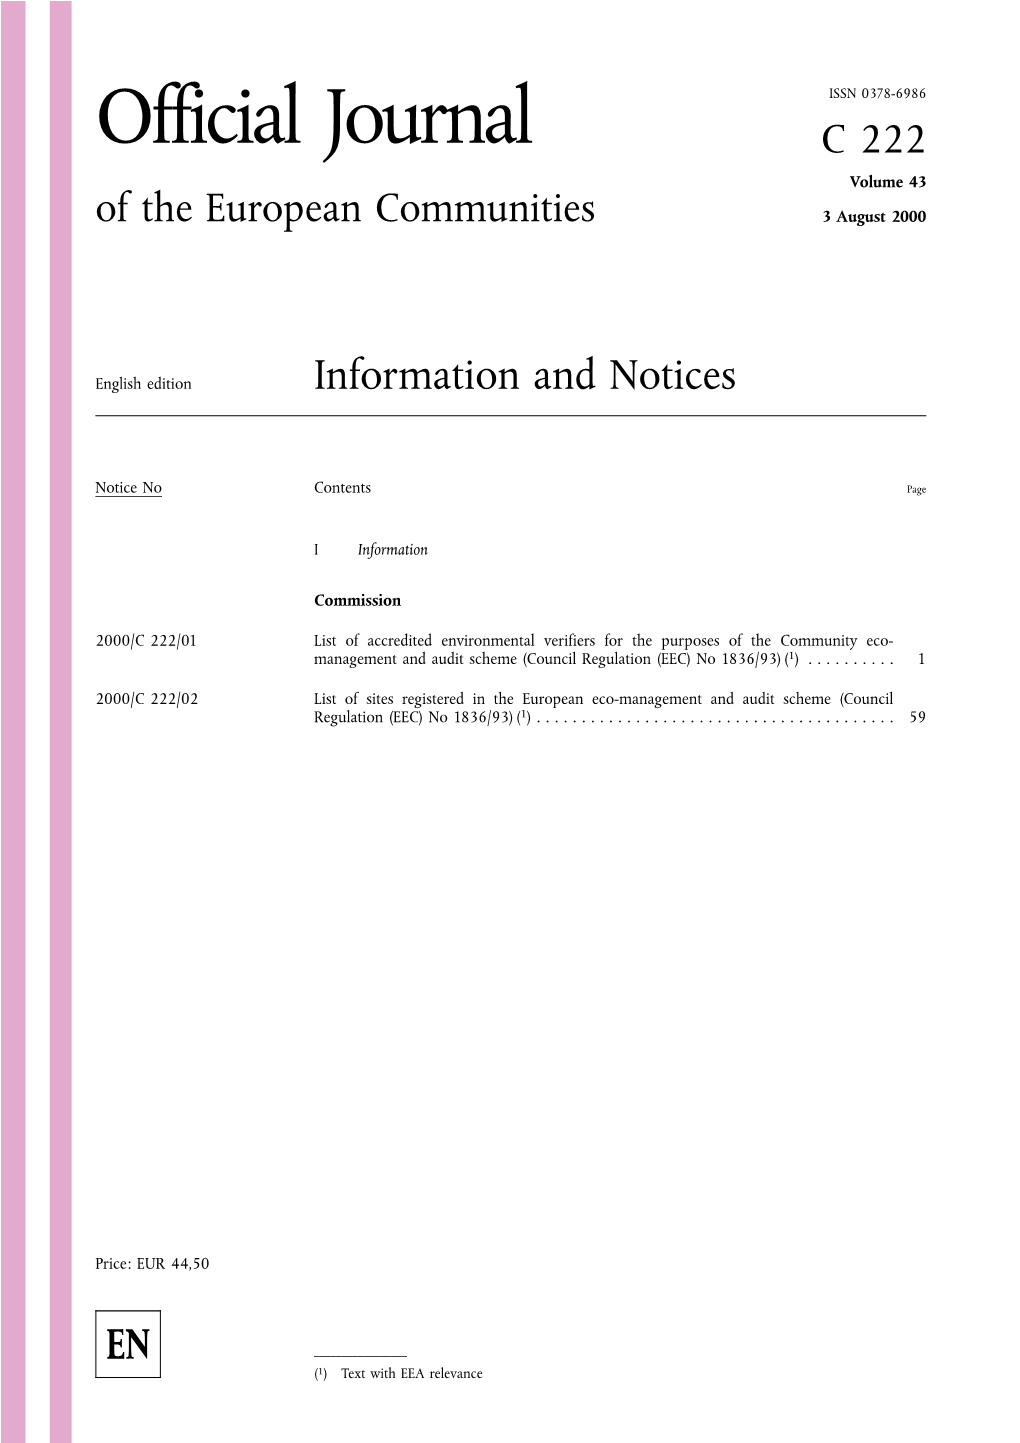 Official Journal C 222 Volume 43 of the European Communities 3 August 2000